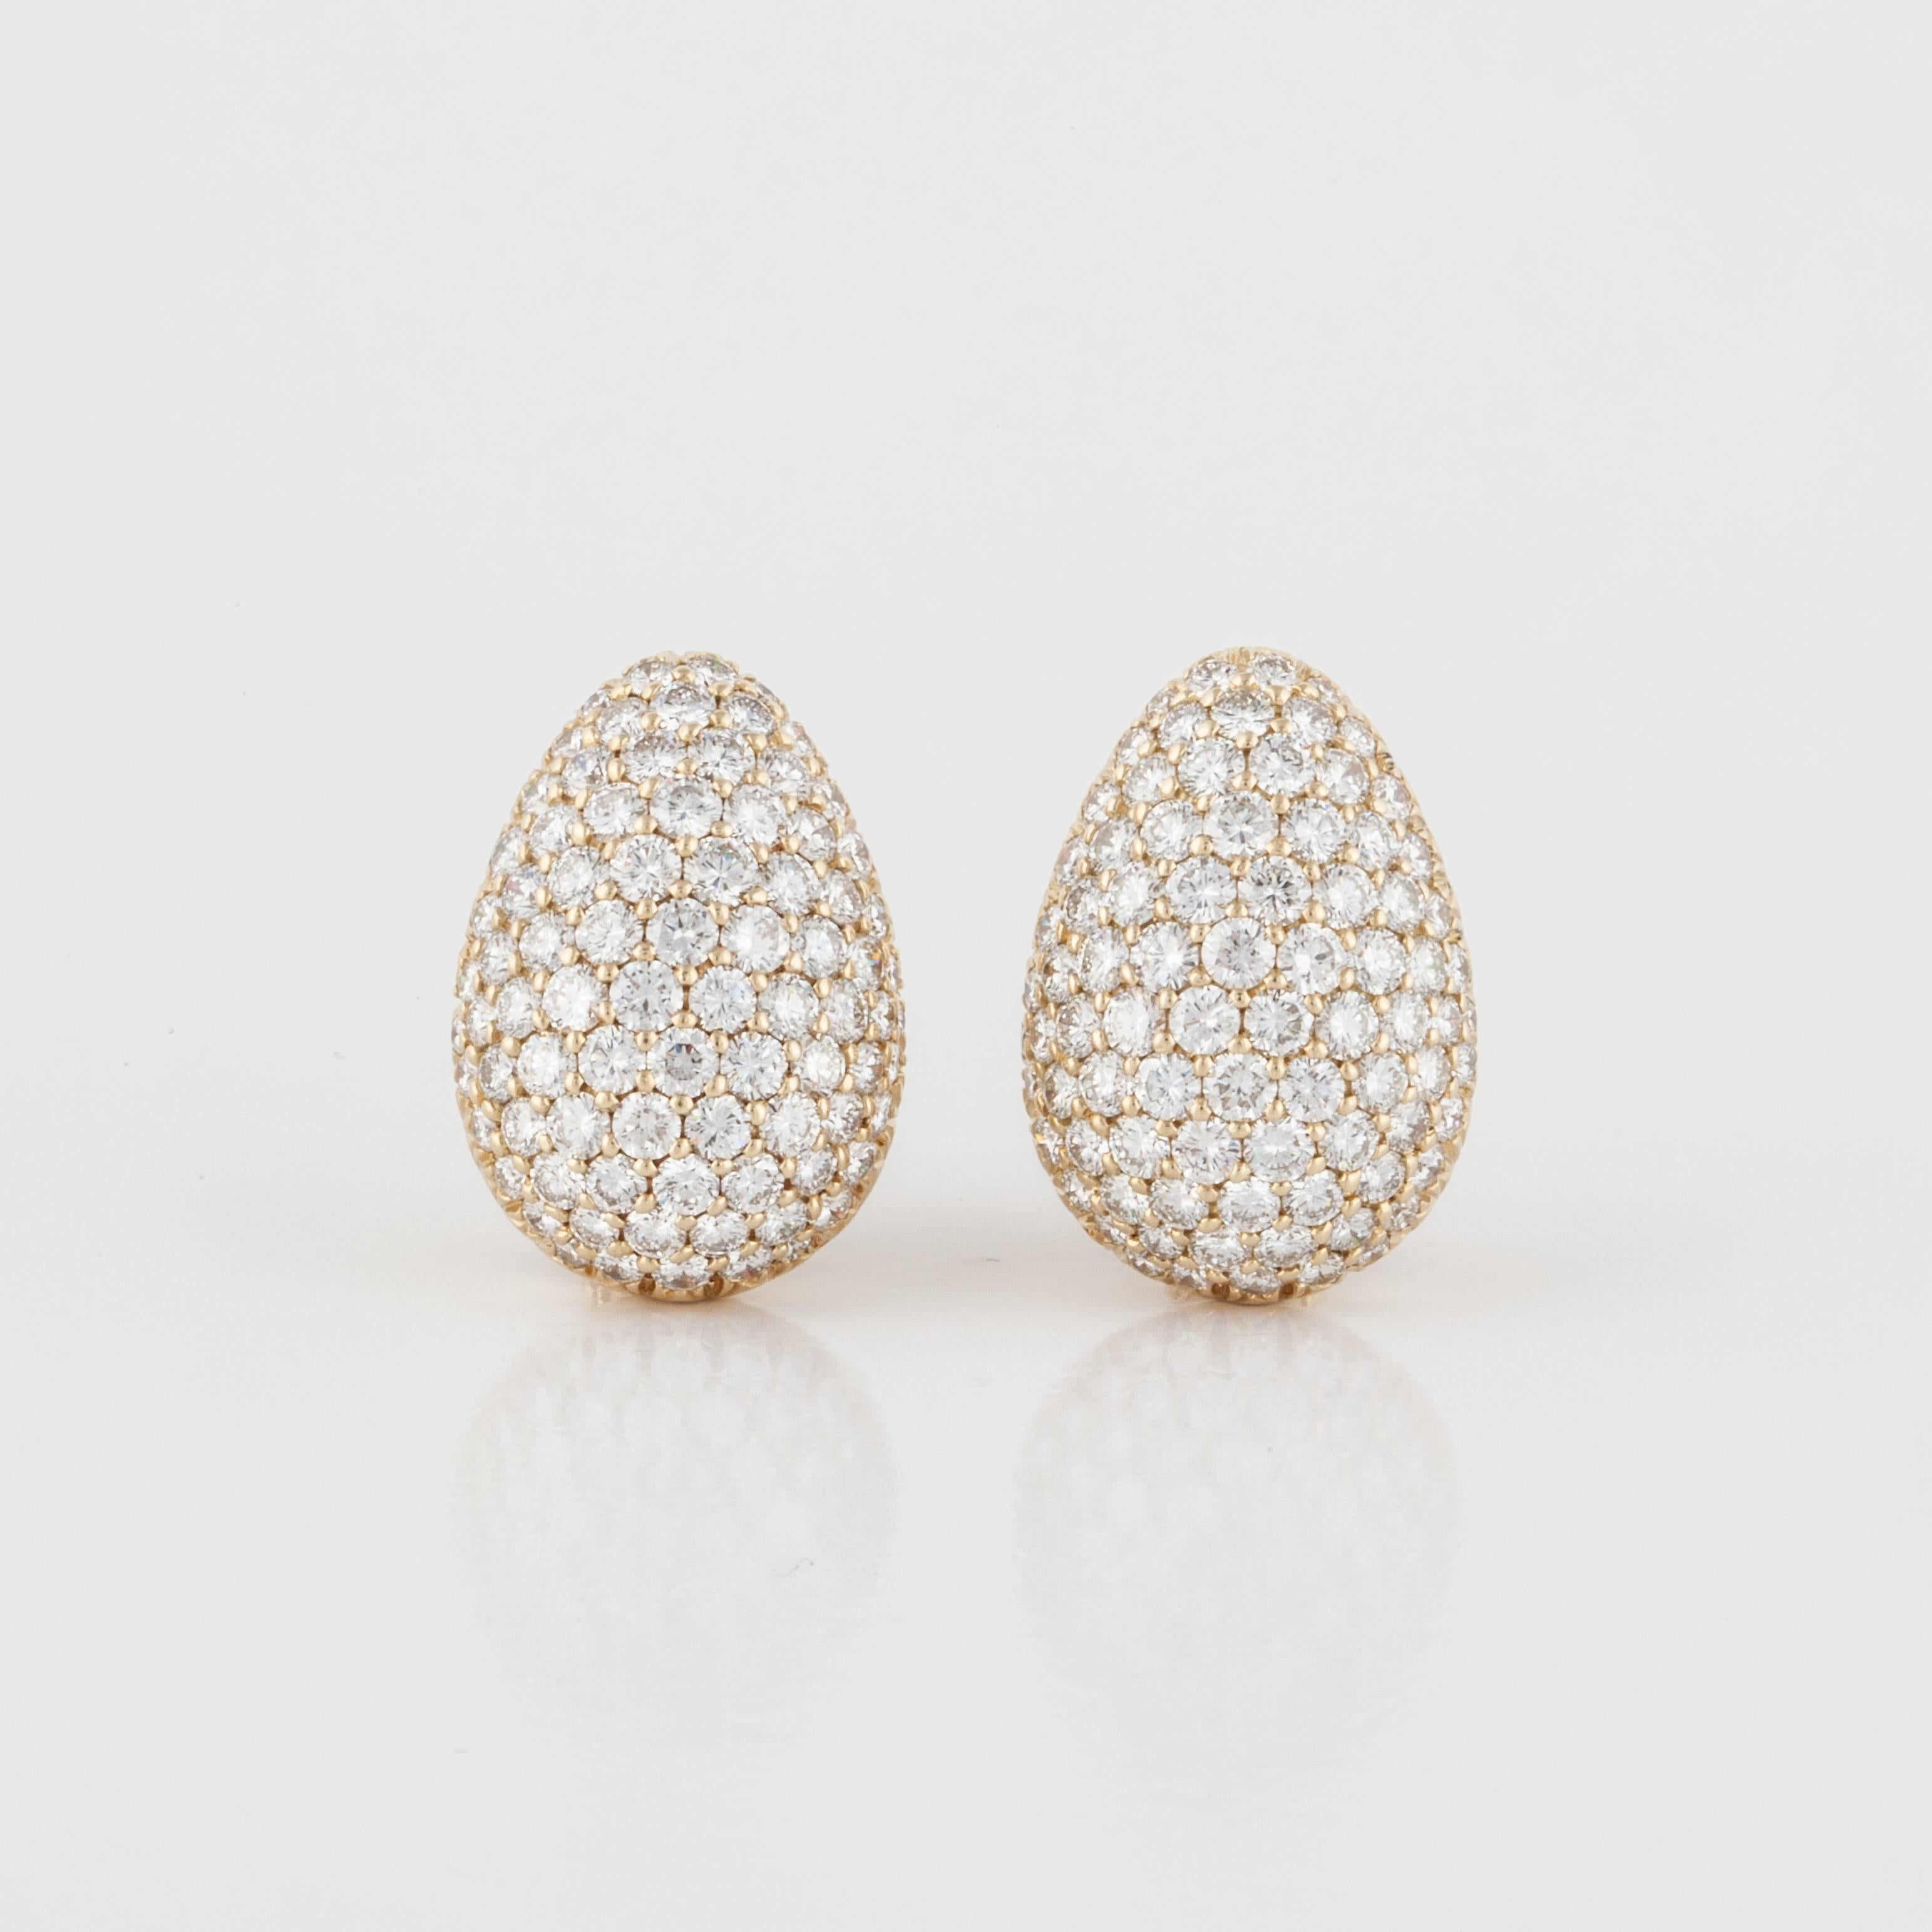 Pair of pear shape pavé diamond earrings in 18K yellow gold.  Earrings are marked 